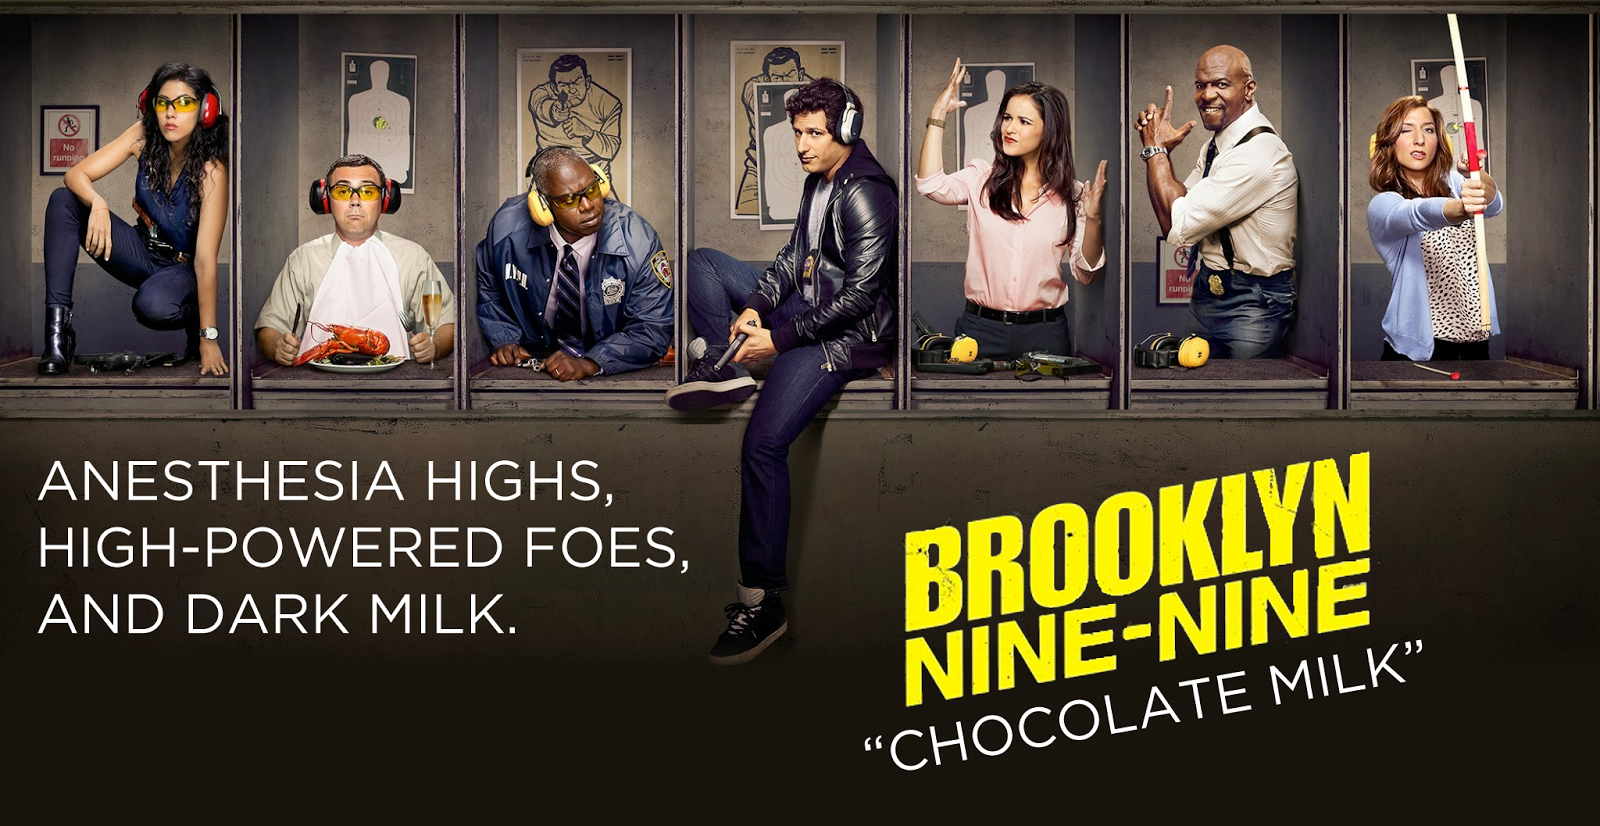 Brooklyn Nine-Nine - Episode 2.02 - Chocolate Milk - Review